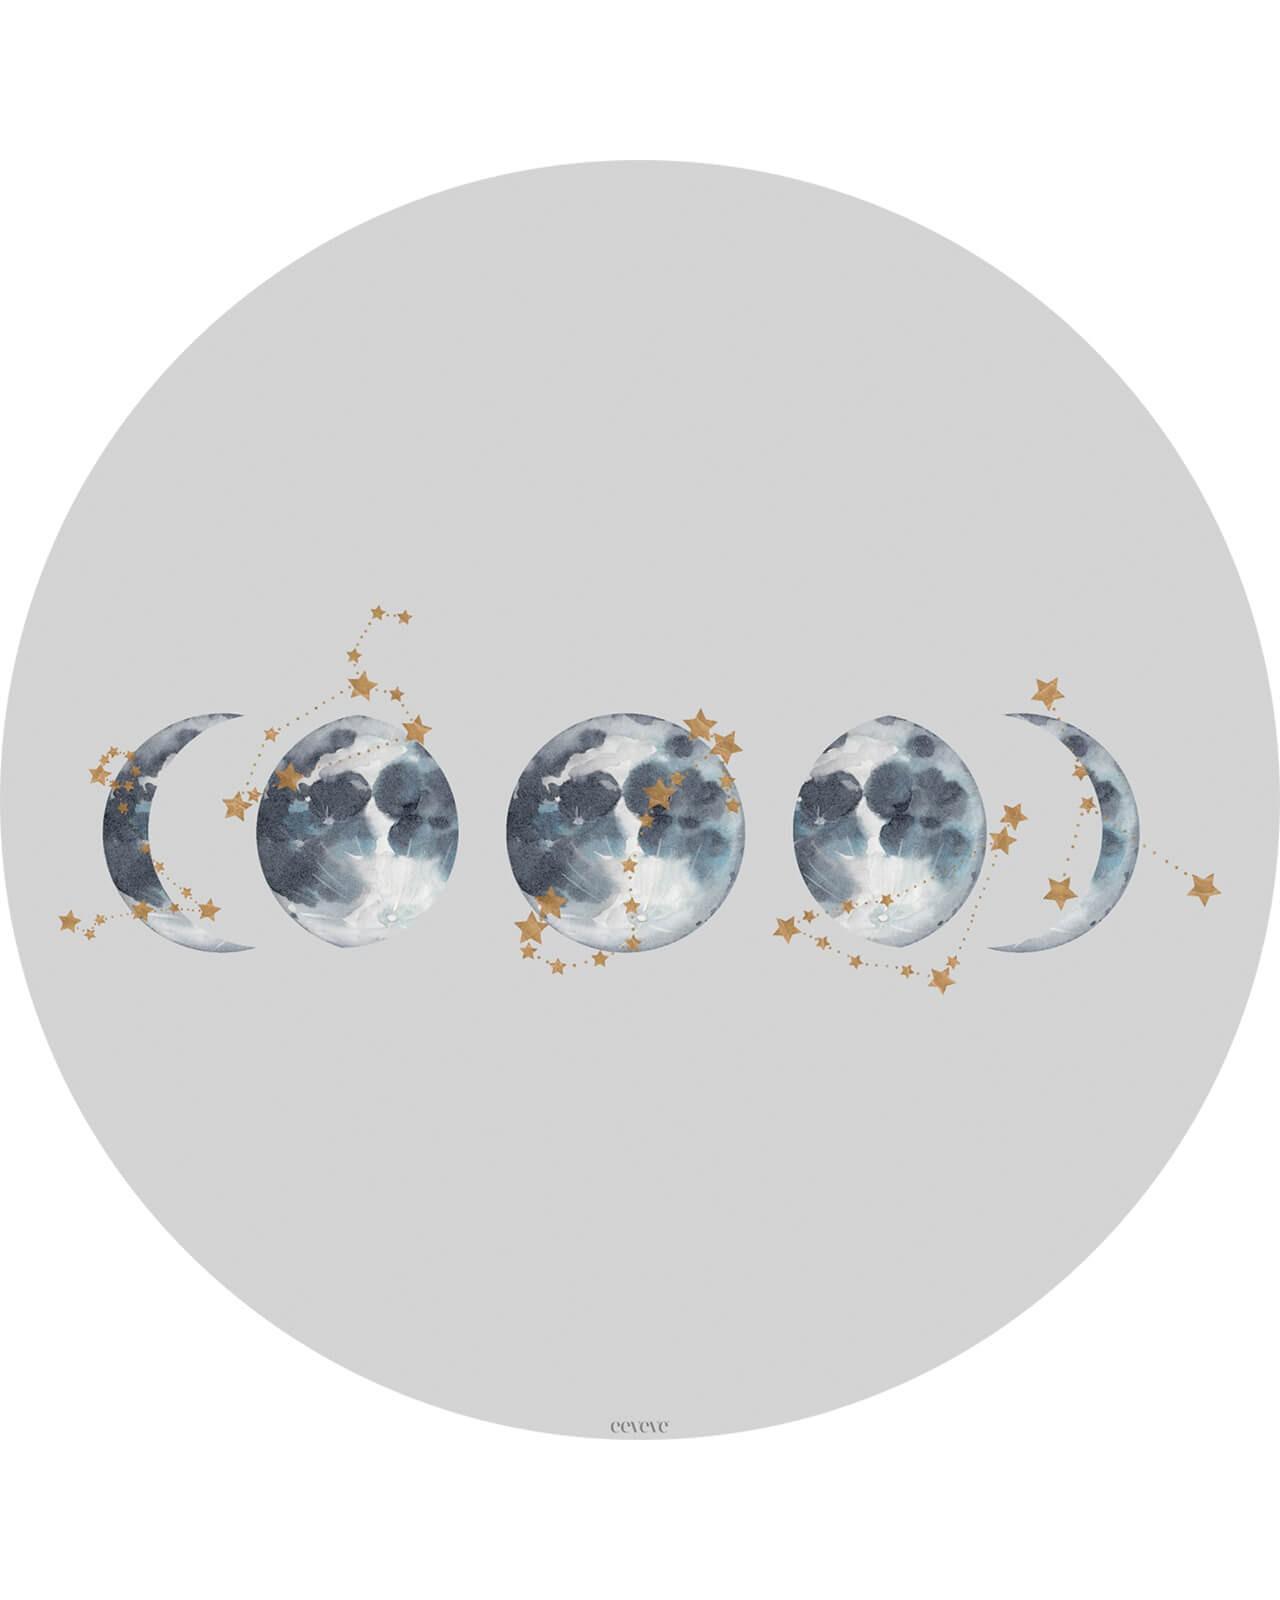 Eeveve - Ronde Vloermat Lunar Eclipse - Light gray